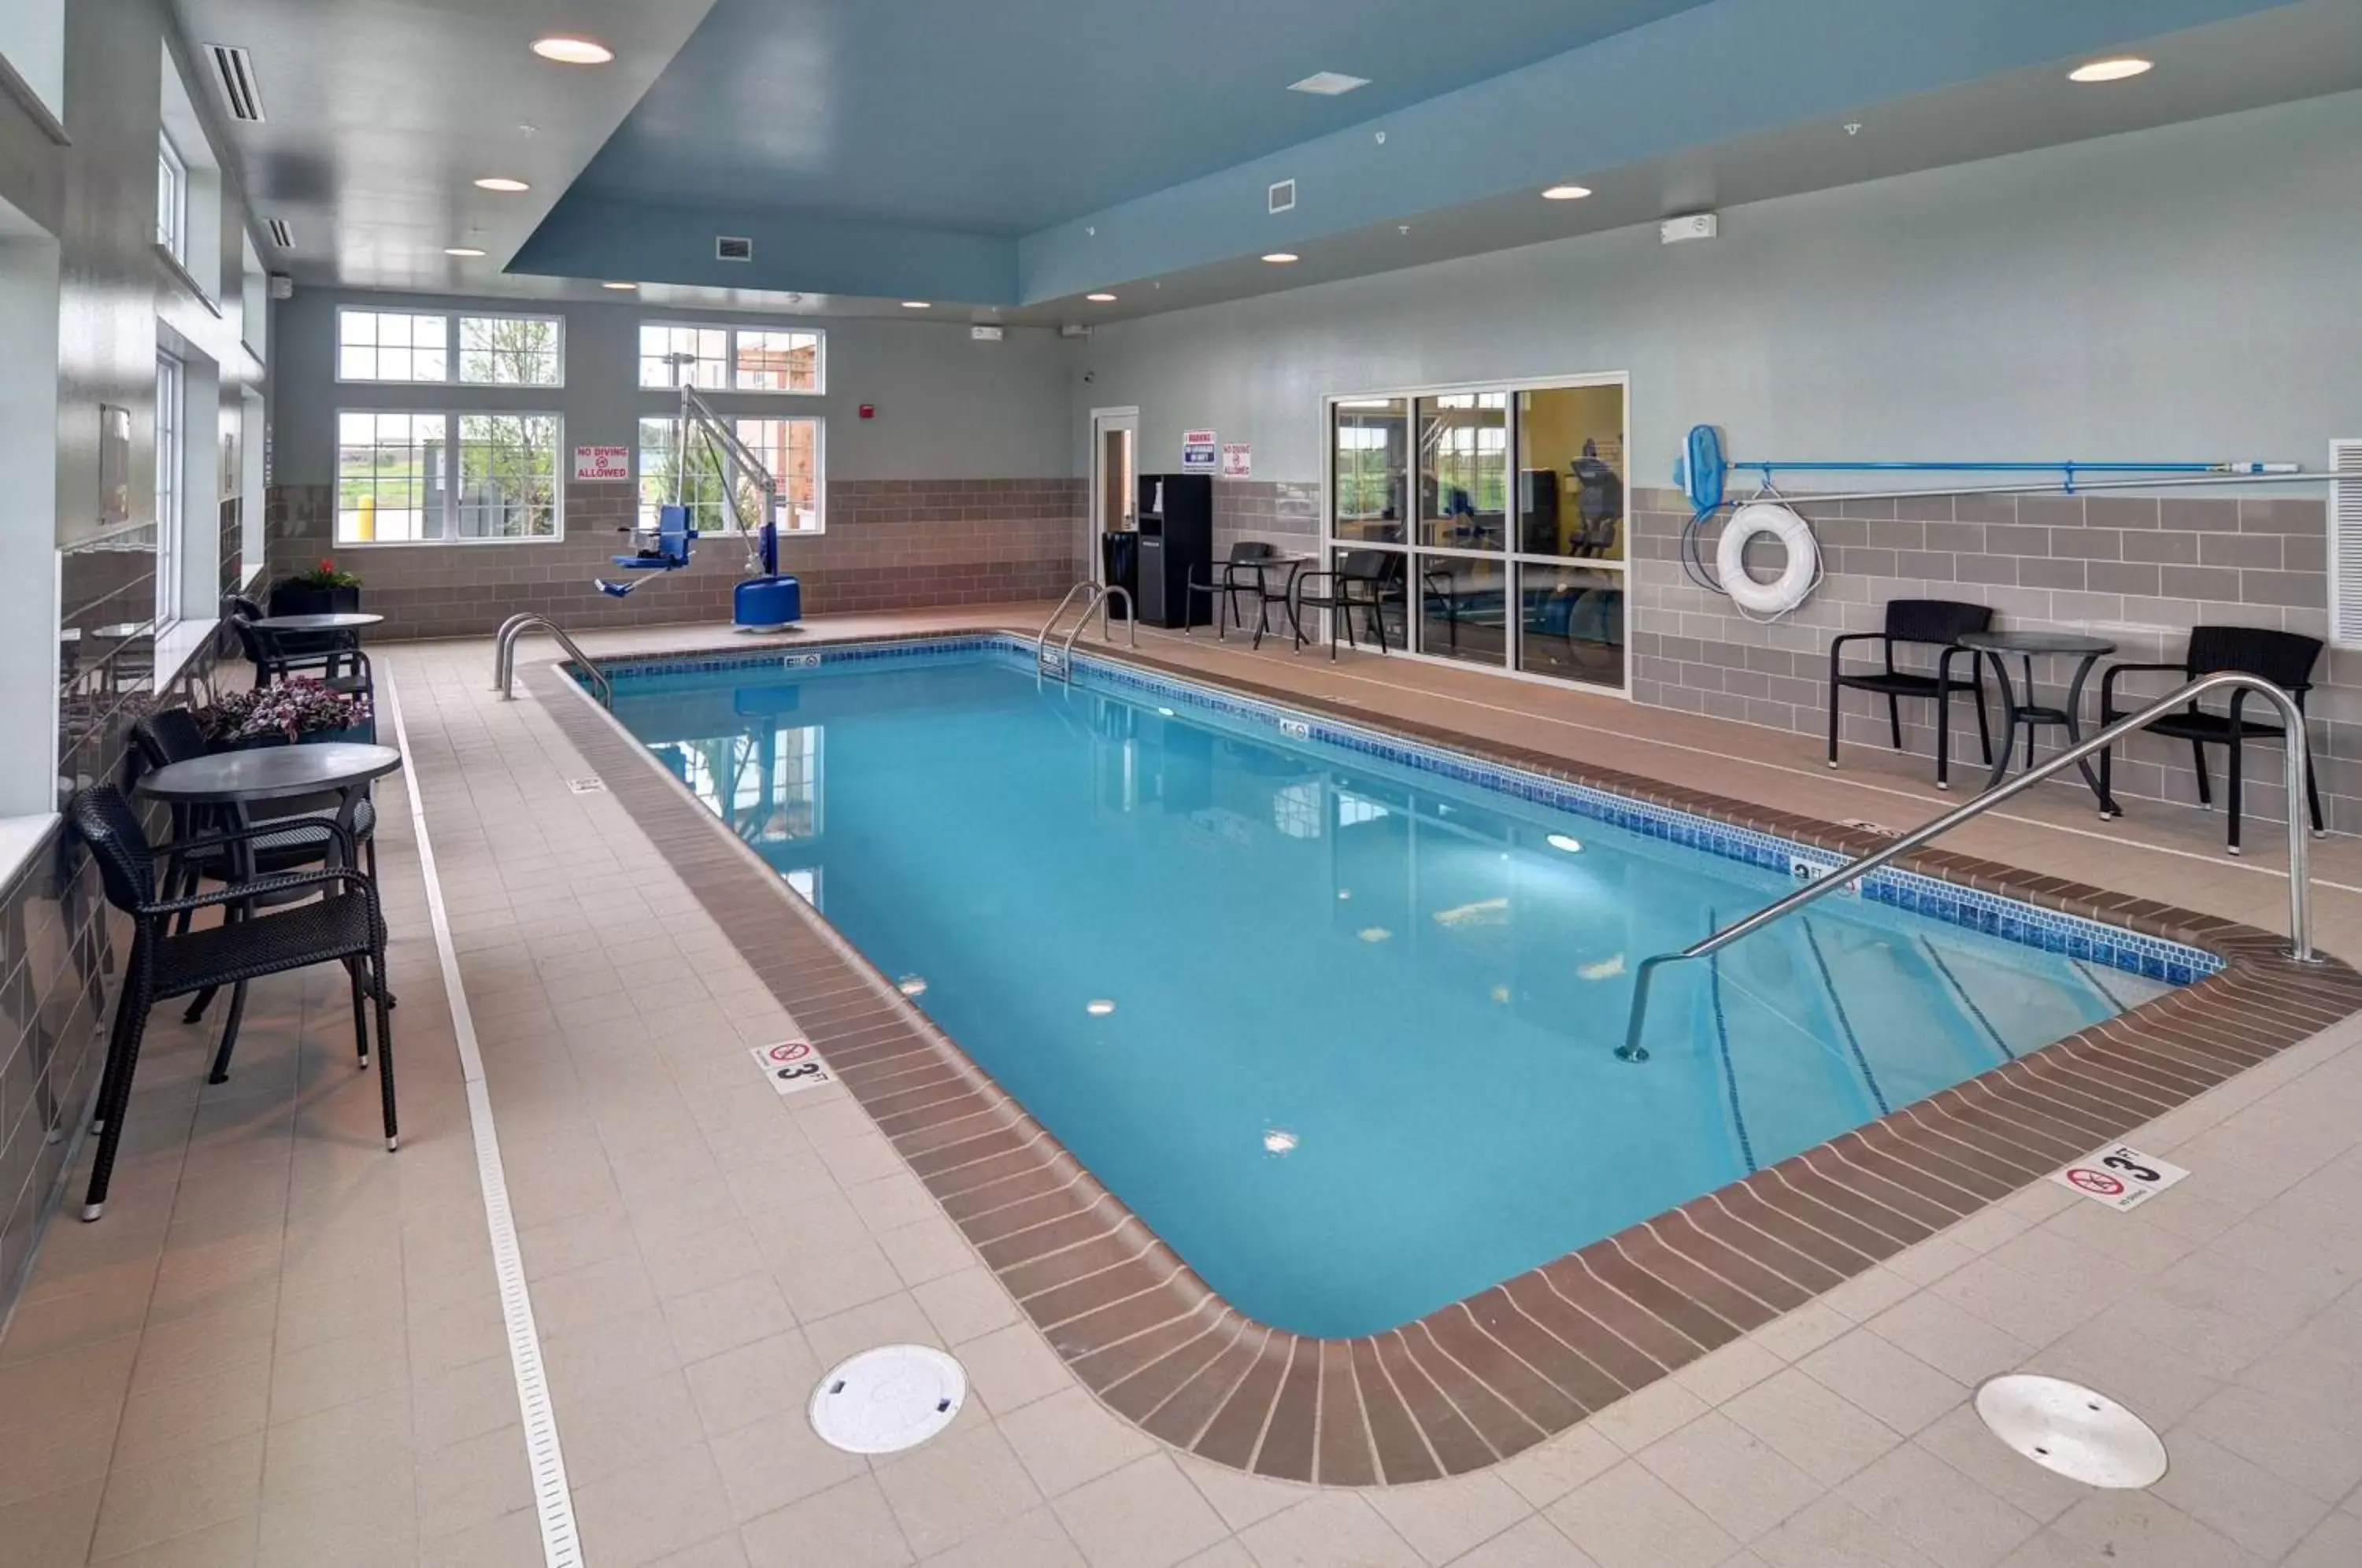 On site, Swimming Pool in Best Western Plus Patterson Park Inn